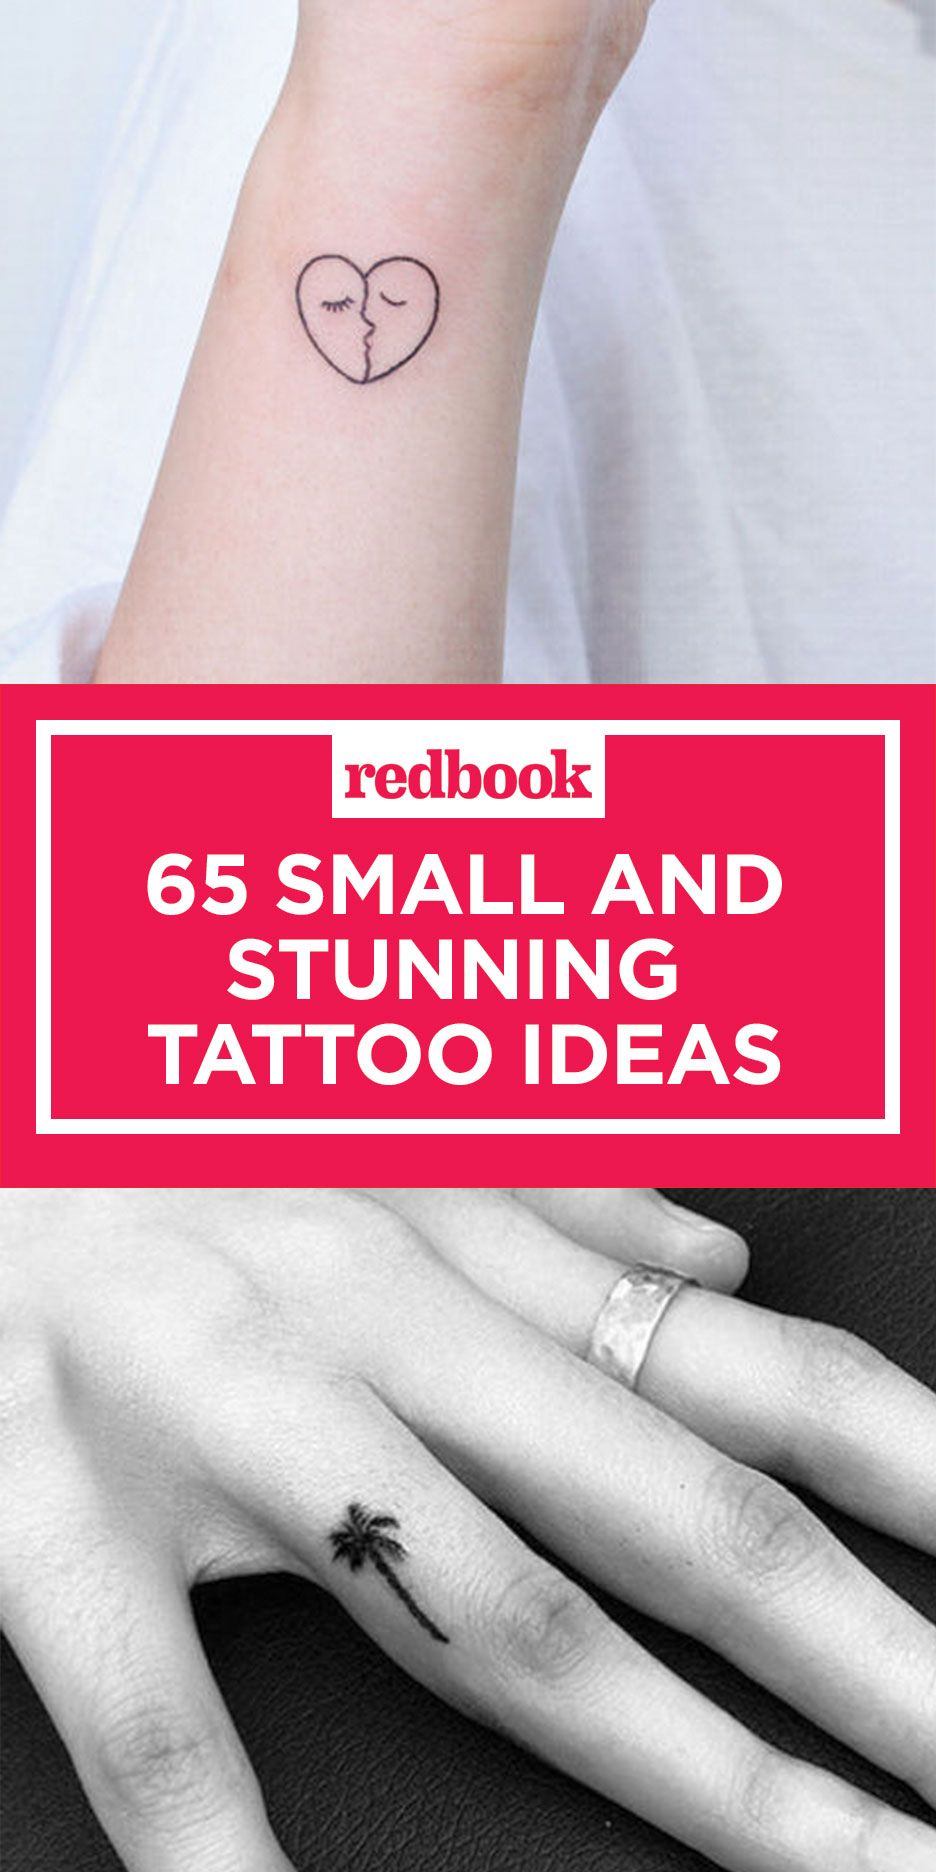 Inspiring Tattoo Designs for Girls  Best Female Tattoos